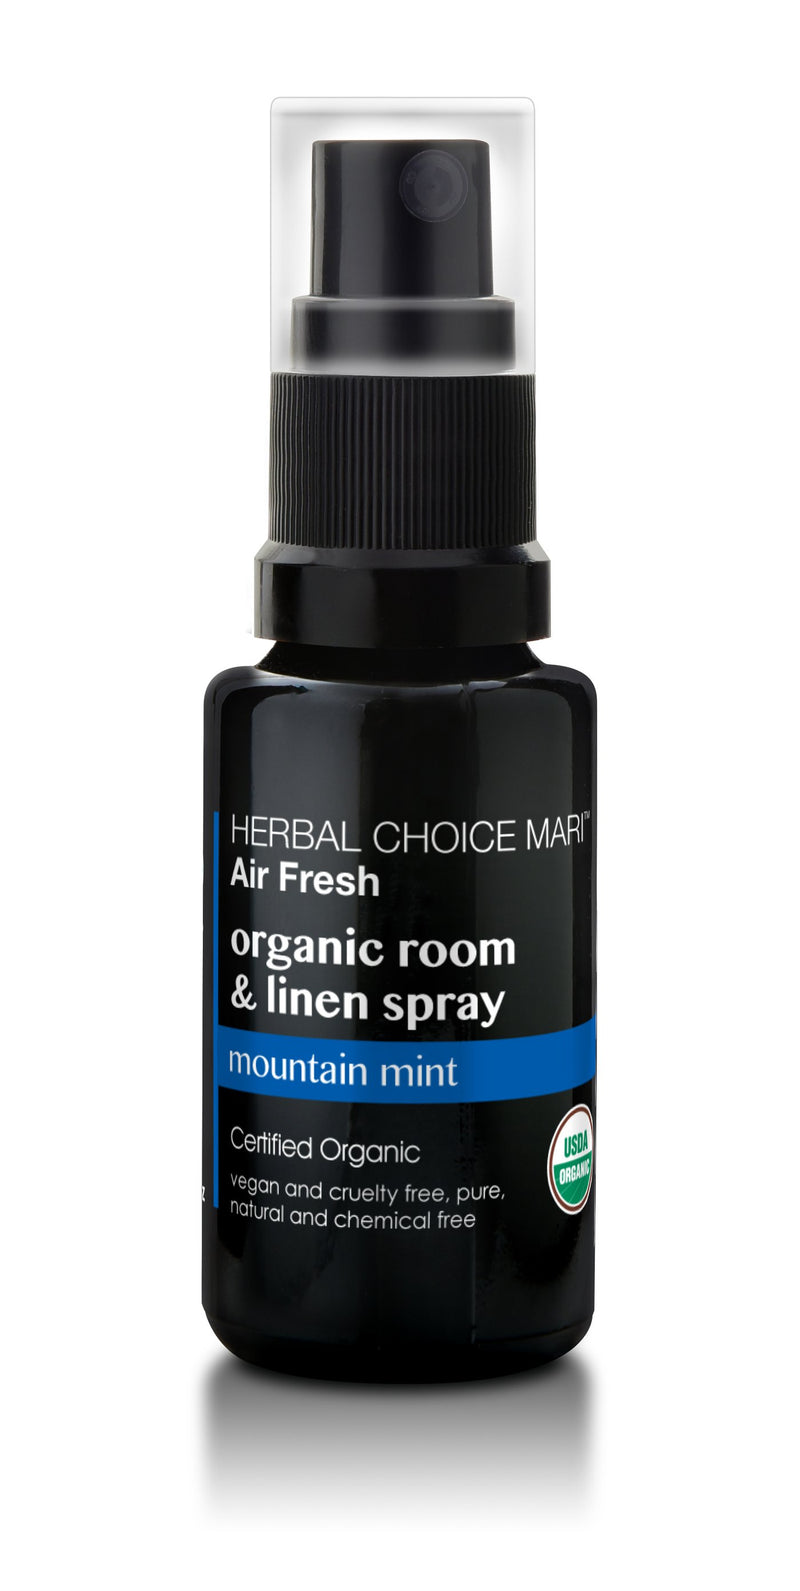 Herbal Choice Mari Organic Linen Spray - Herbal Choice Mari Organic Linen Spray - Herbal Choice Mari Organic Linen Spray